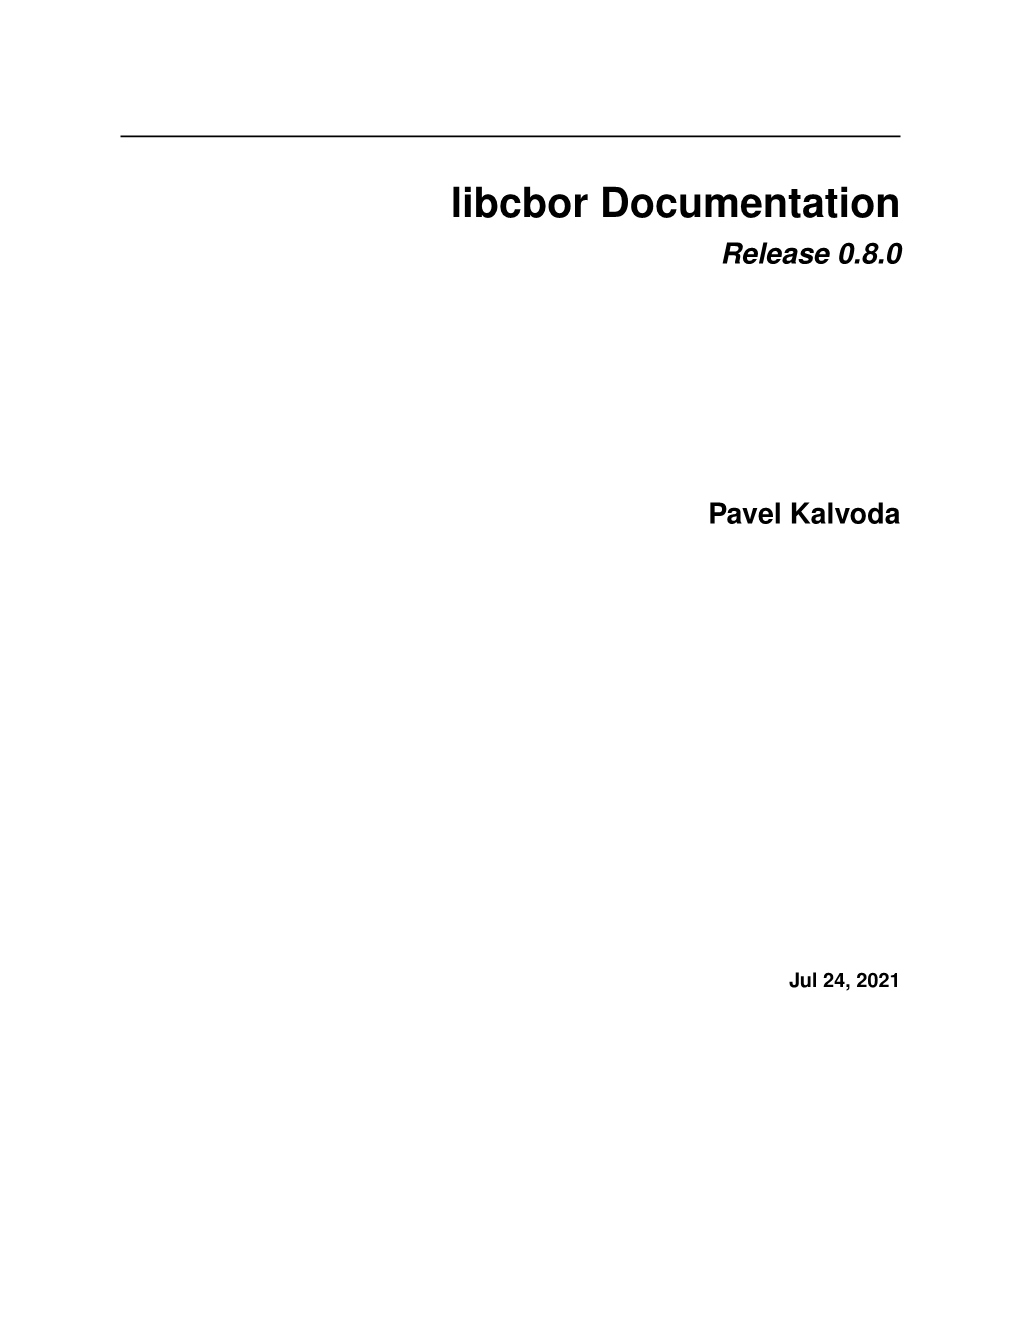 Libcbor Documentation Release 0.8.0